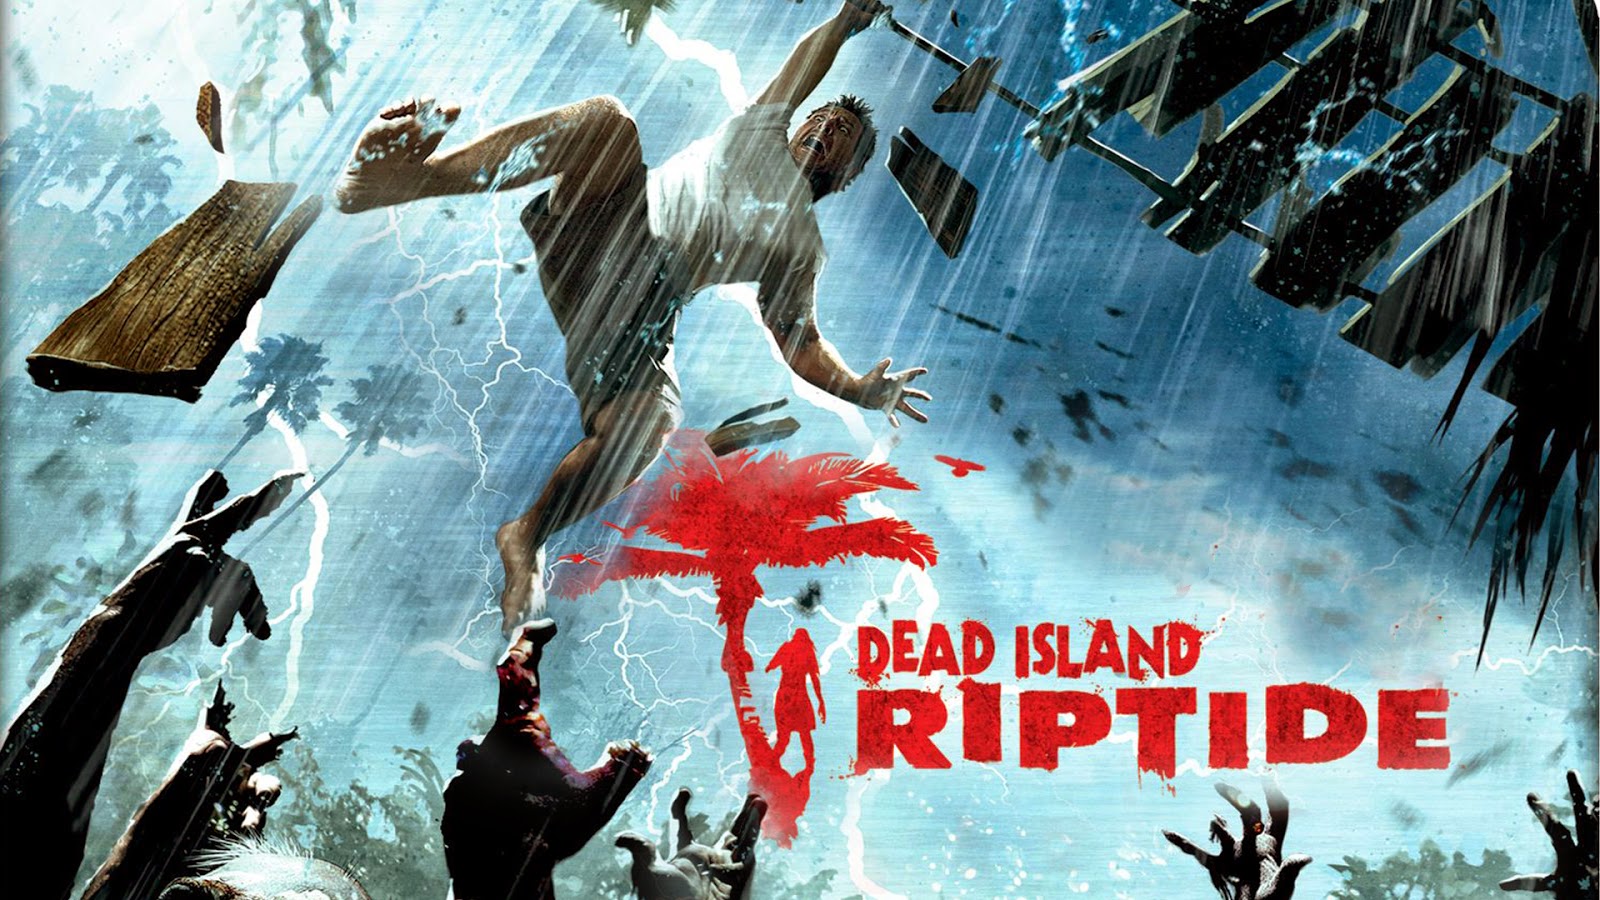 Dead Island Riptide Review